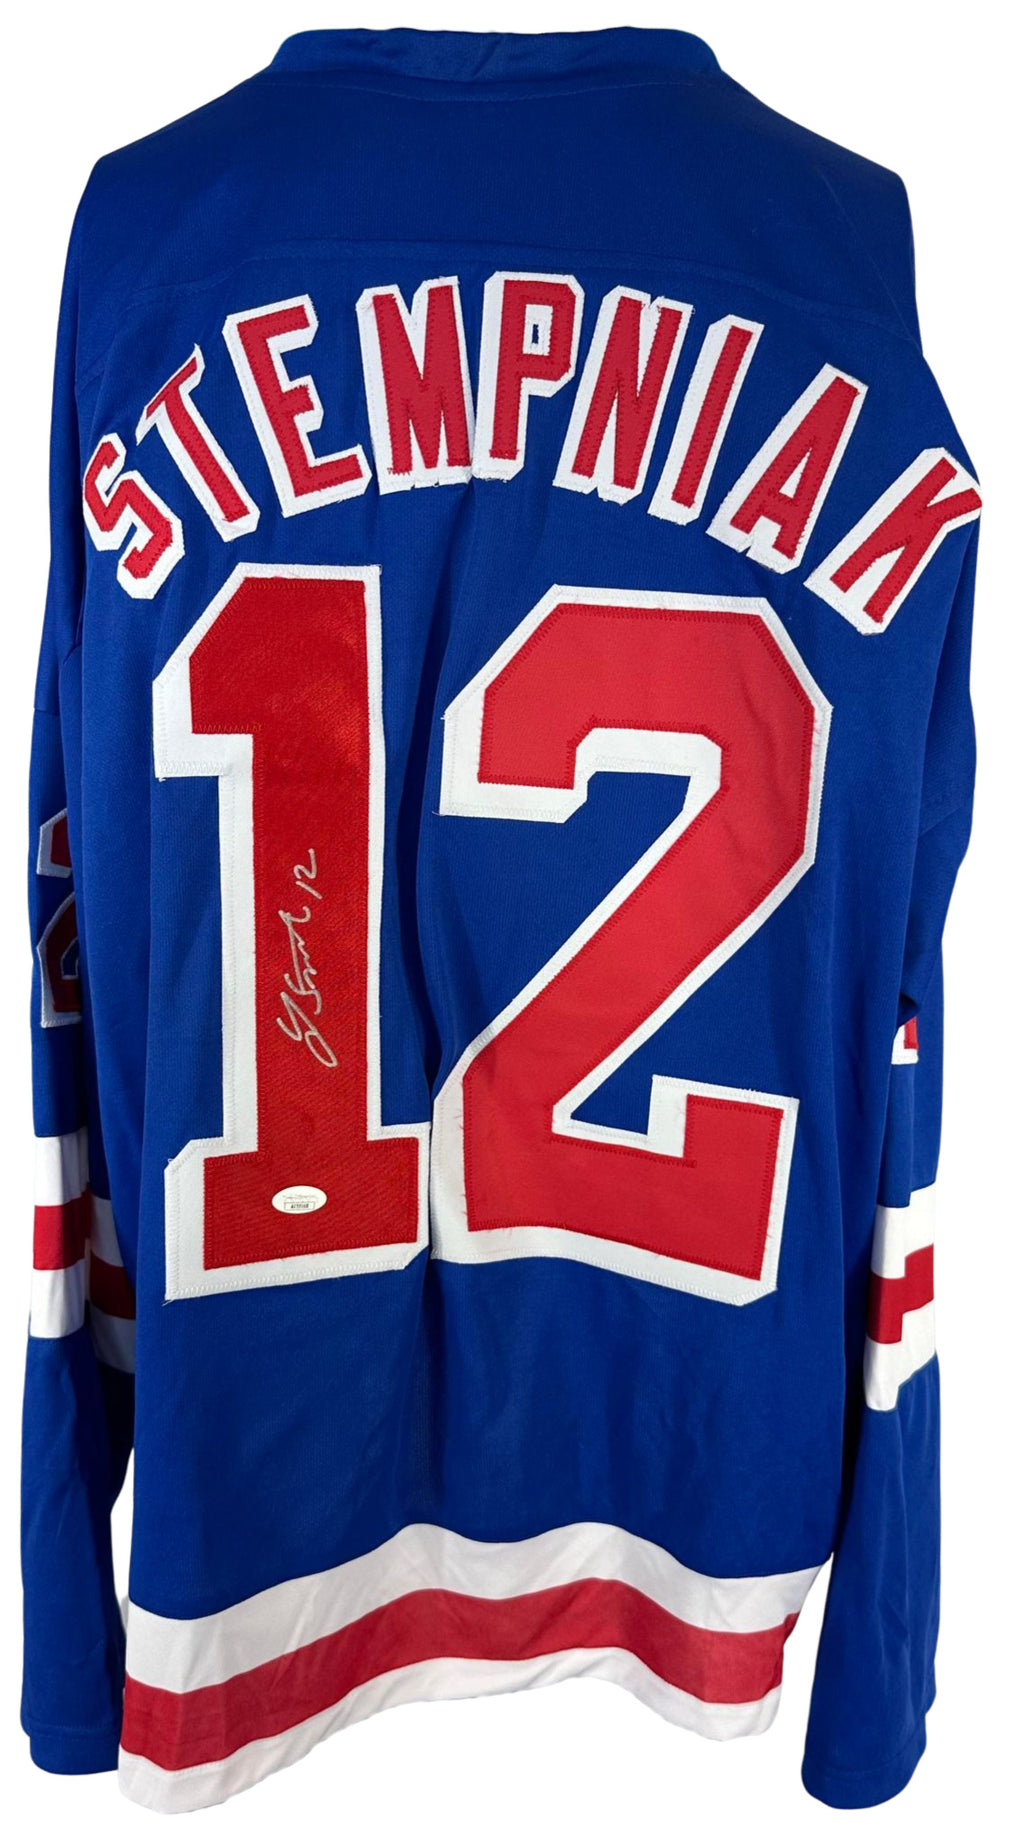 Lee Stempniak autographed signed jersey NHL New York Rangers JSA COA